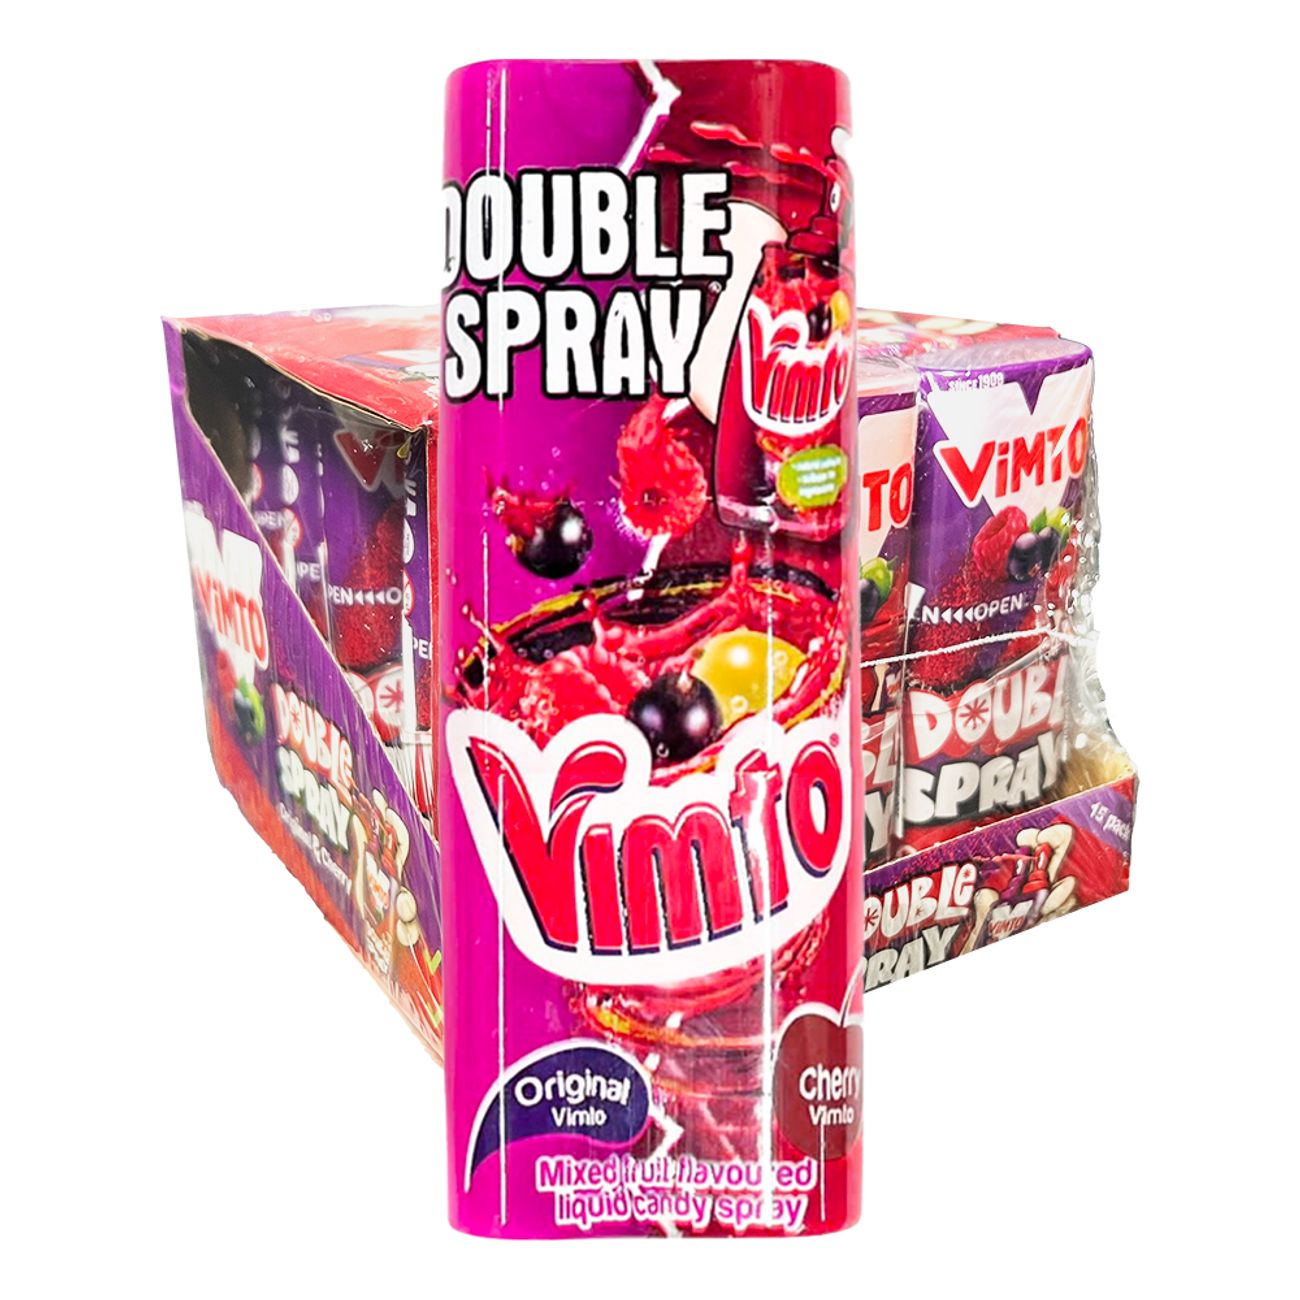 vimto-double-spray-storpack-95398-3